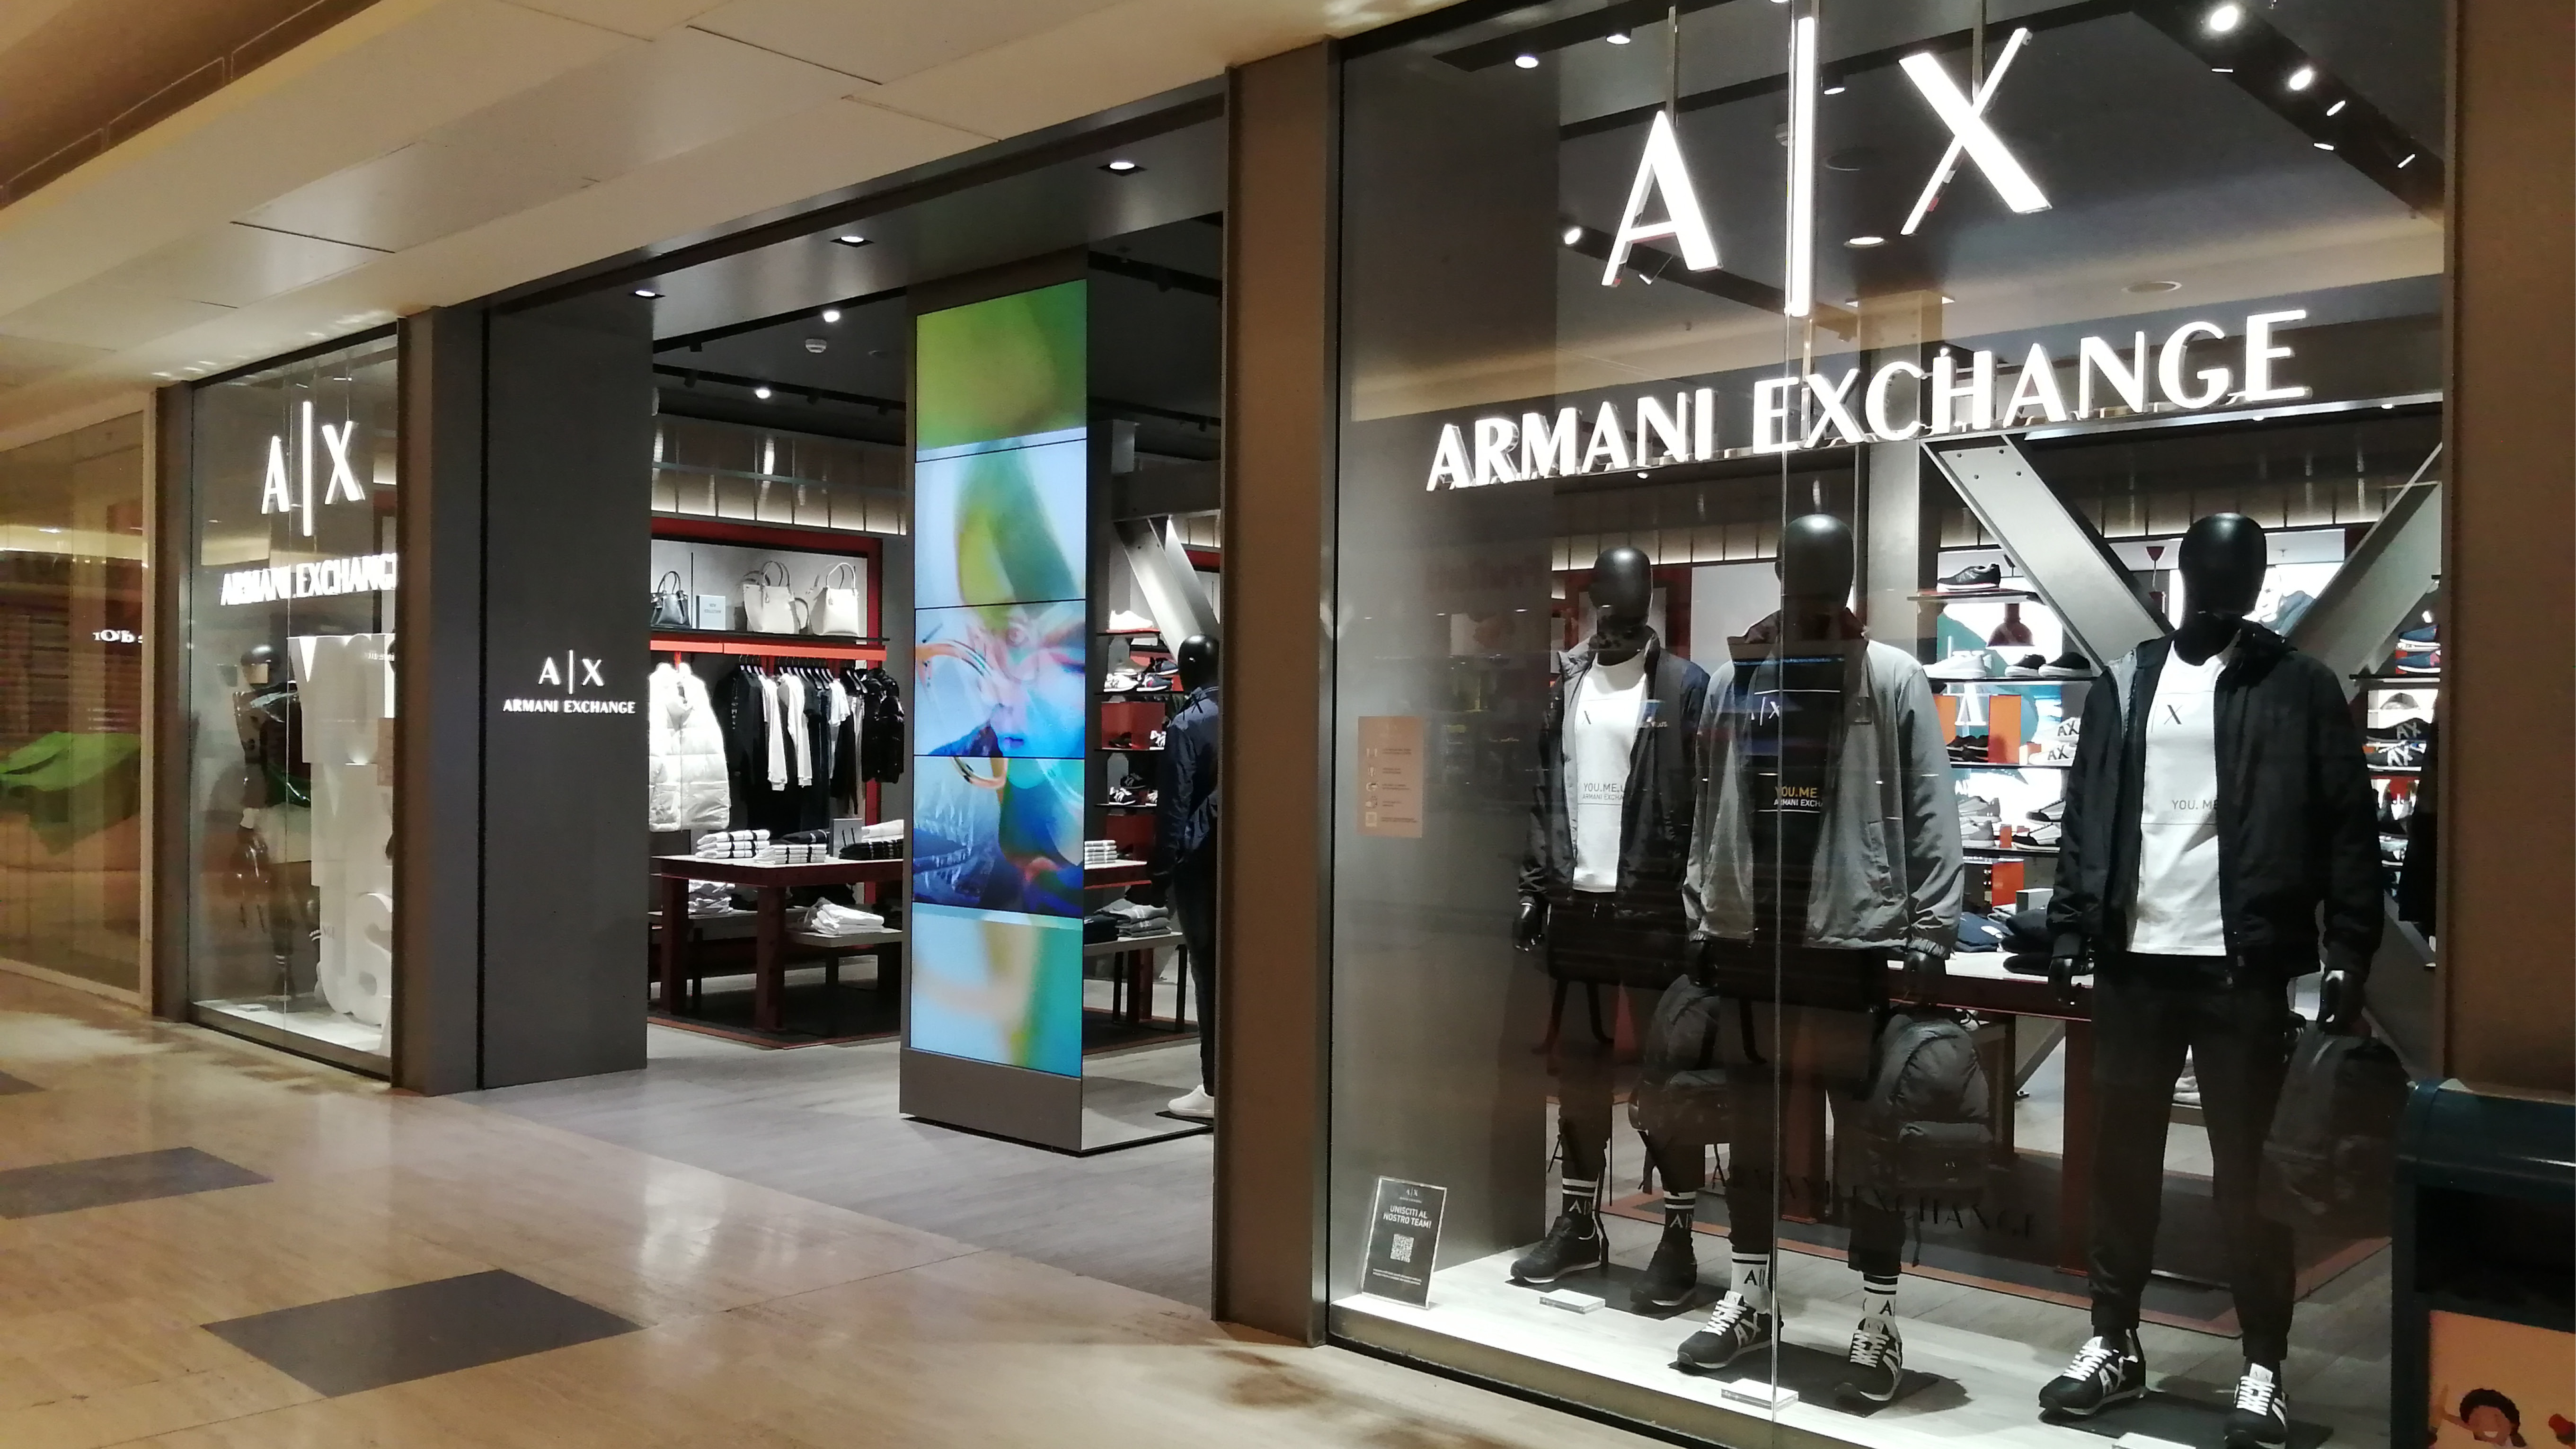 Armani exchange outlet. Армани эксчендж. AX Armani Exchange. Армани вывеска. Аутлет Армани в Италии.